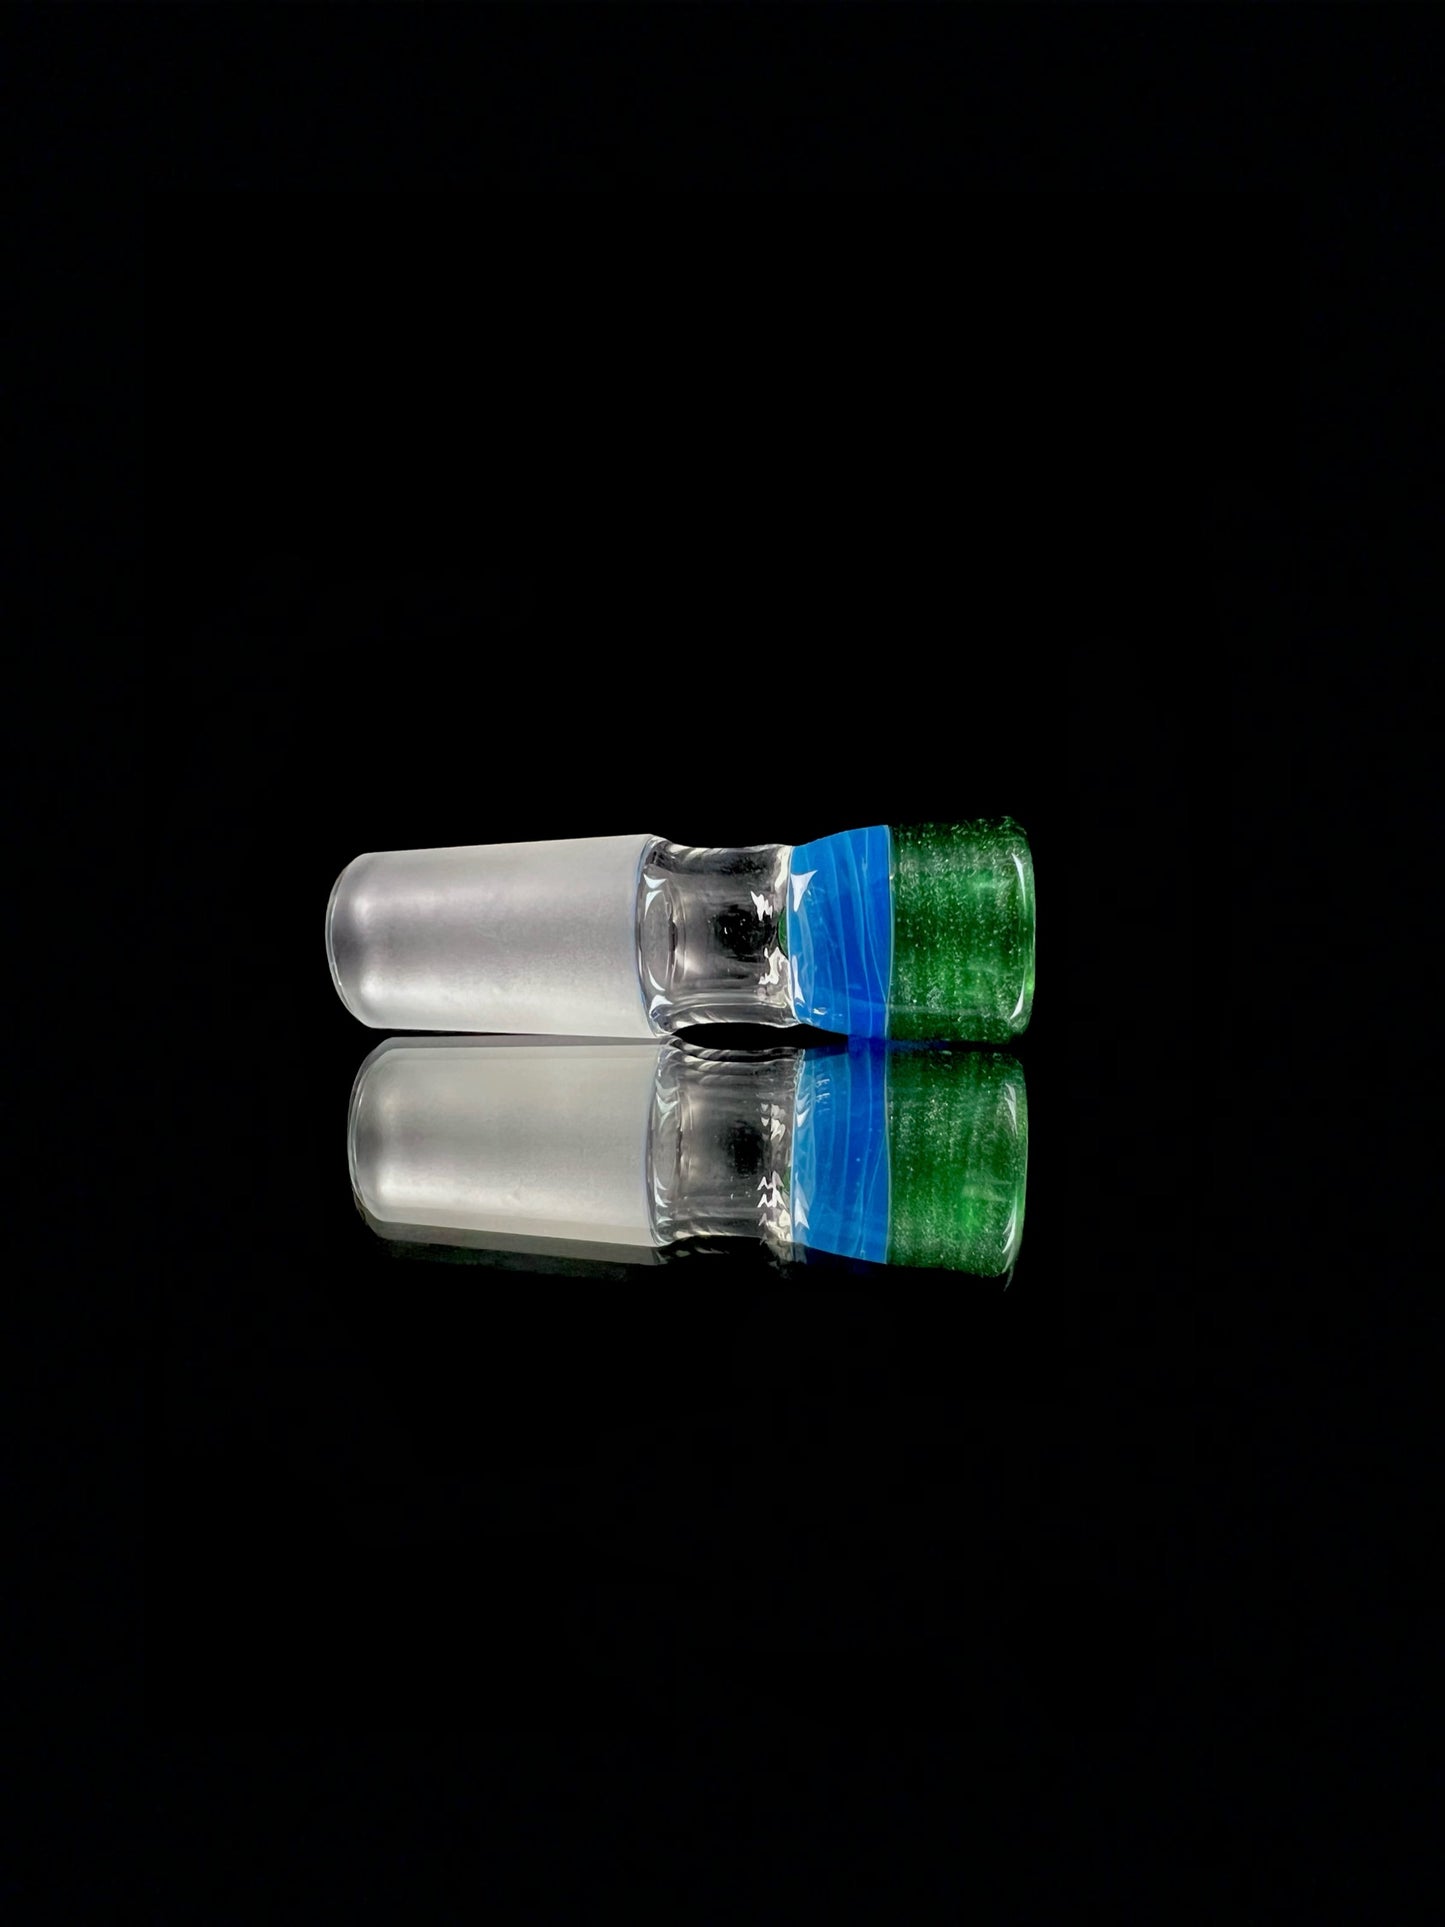 18mm irrid x green stardust slide by Higgs Glass